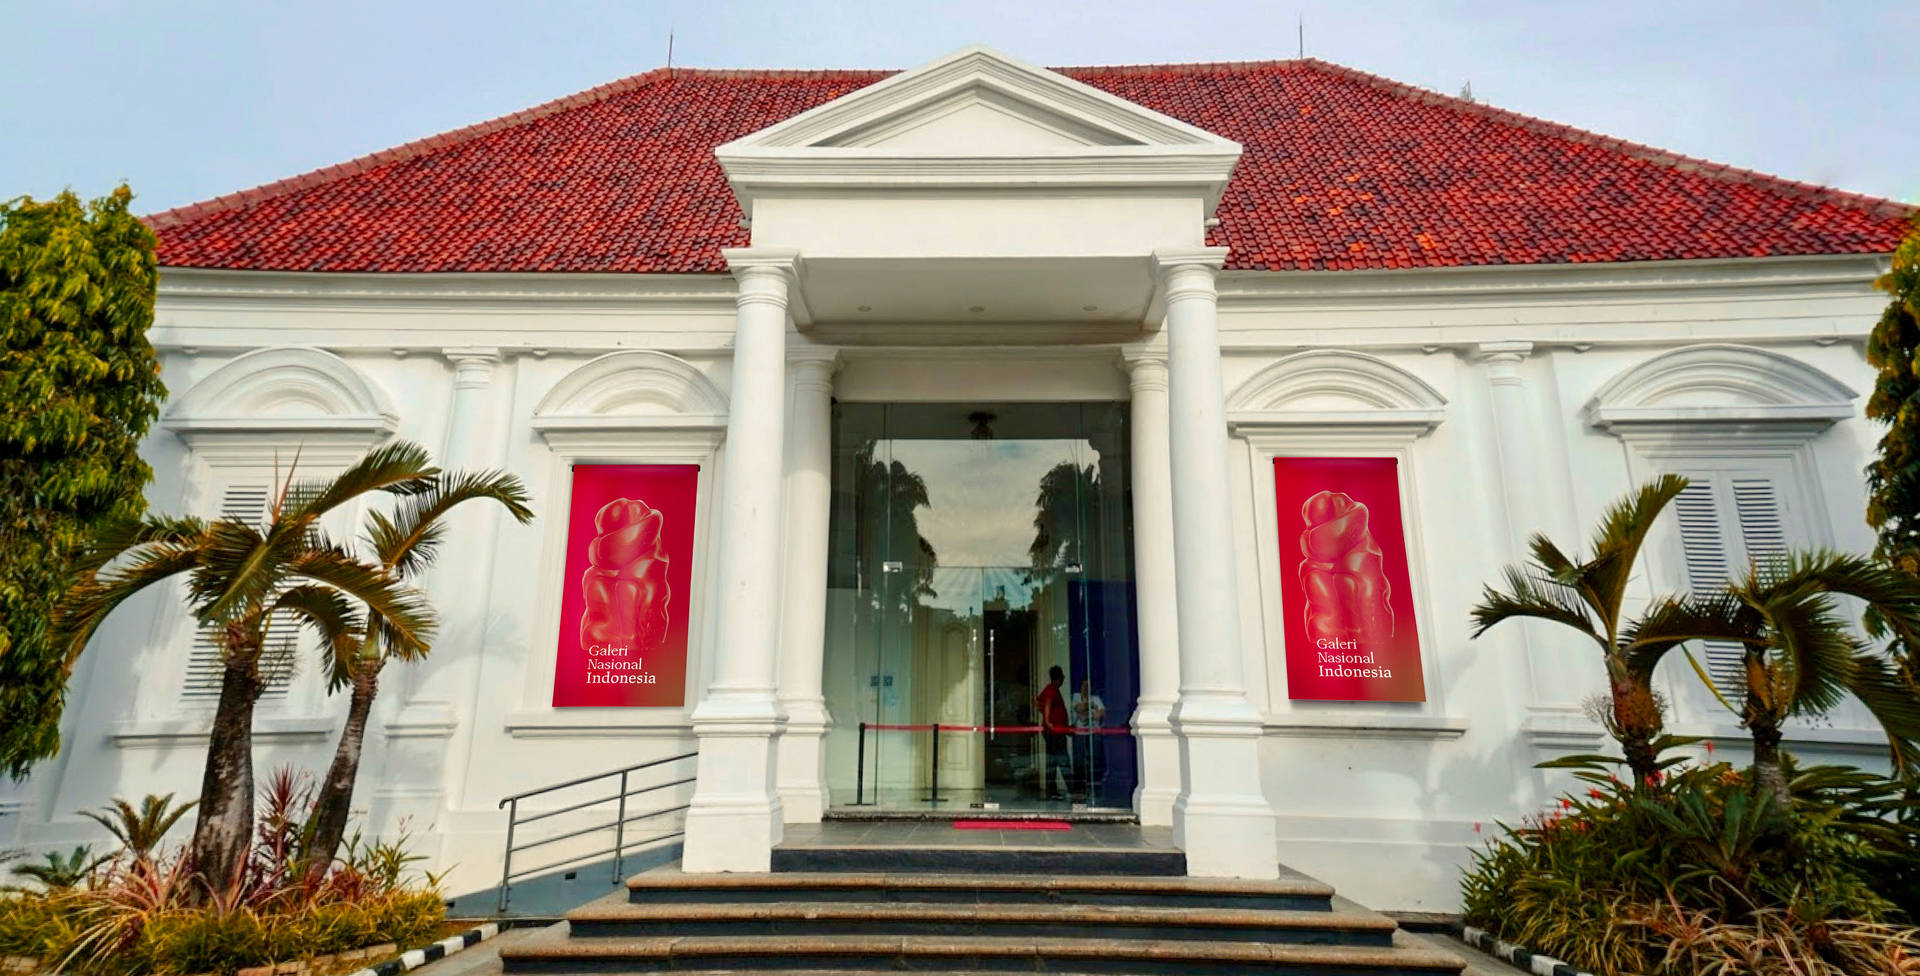 Jakarta National Gallery